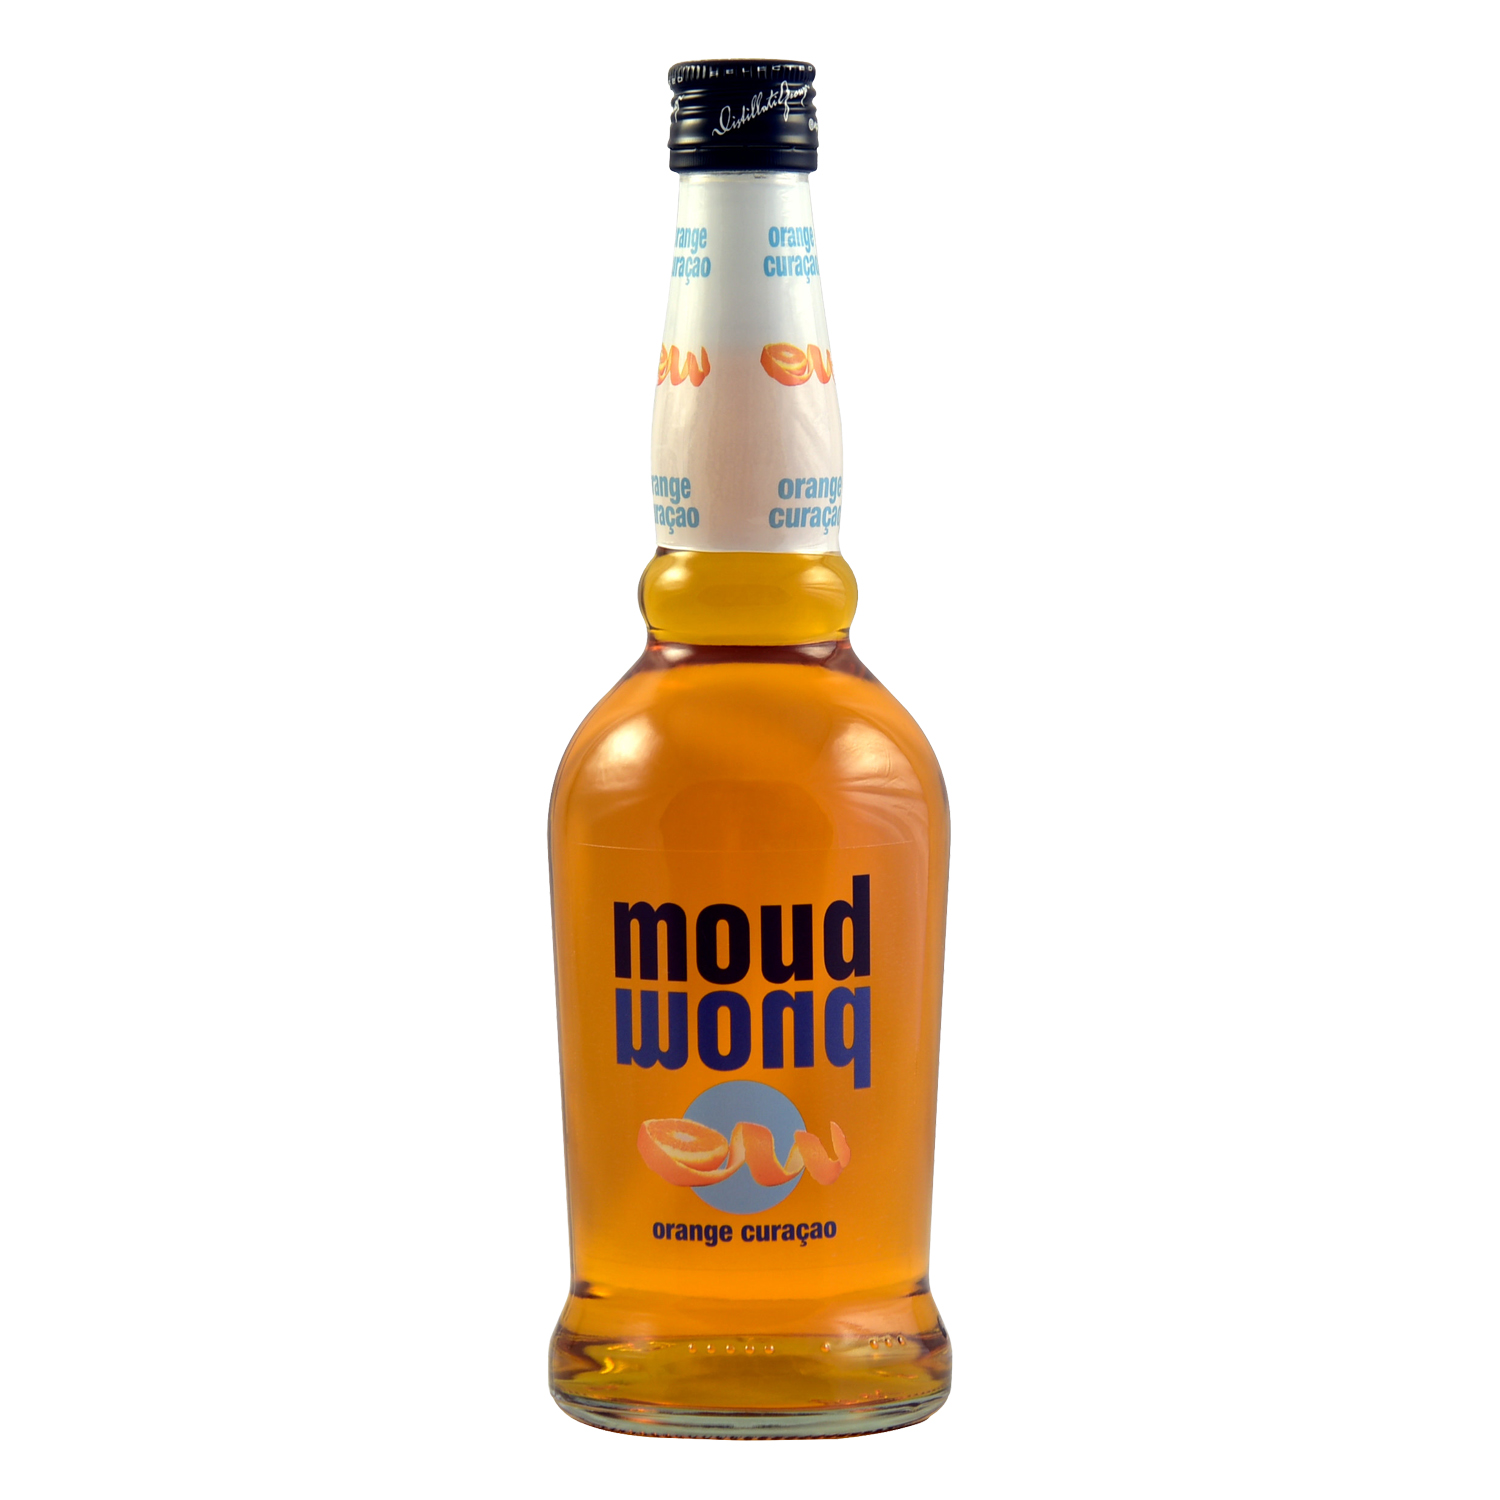 MOUD - Orange Curacao Likör, 25% Vol. 0,7 ltr.